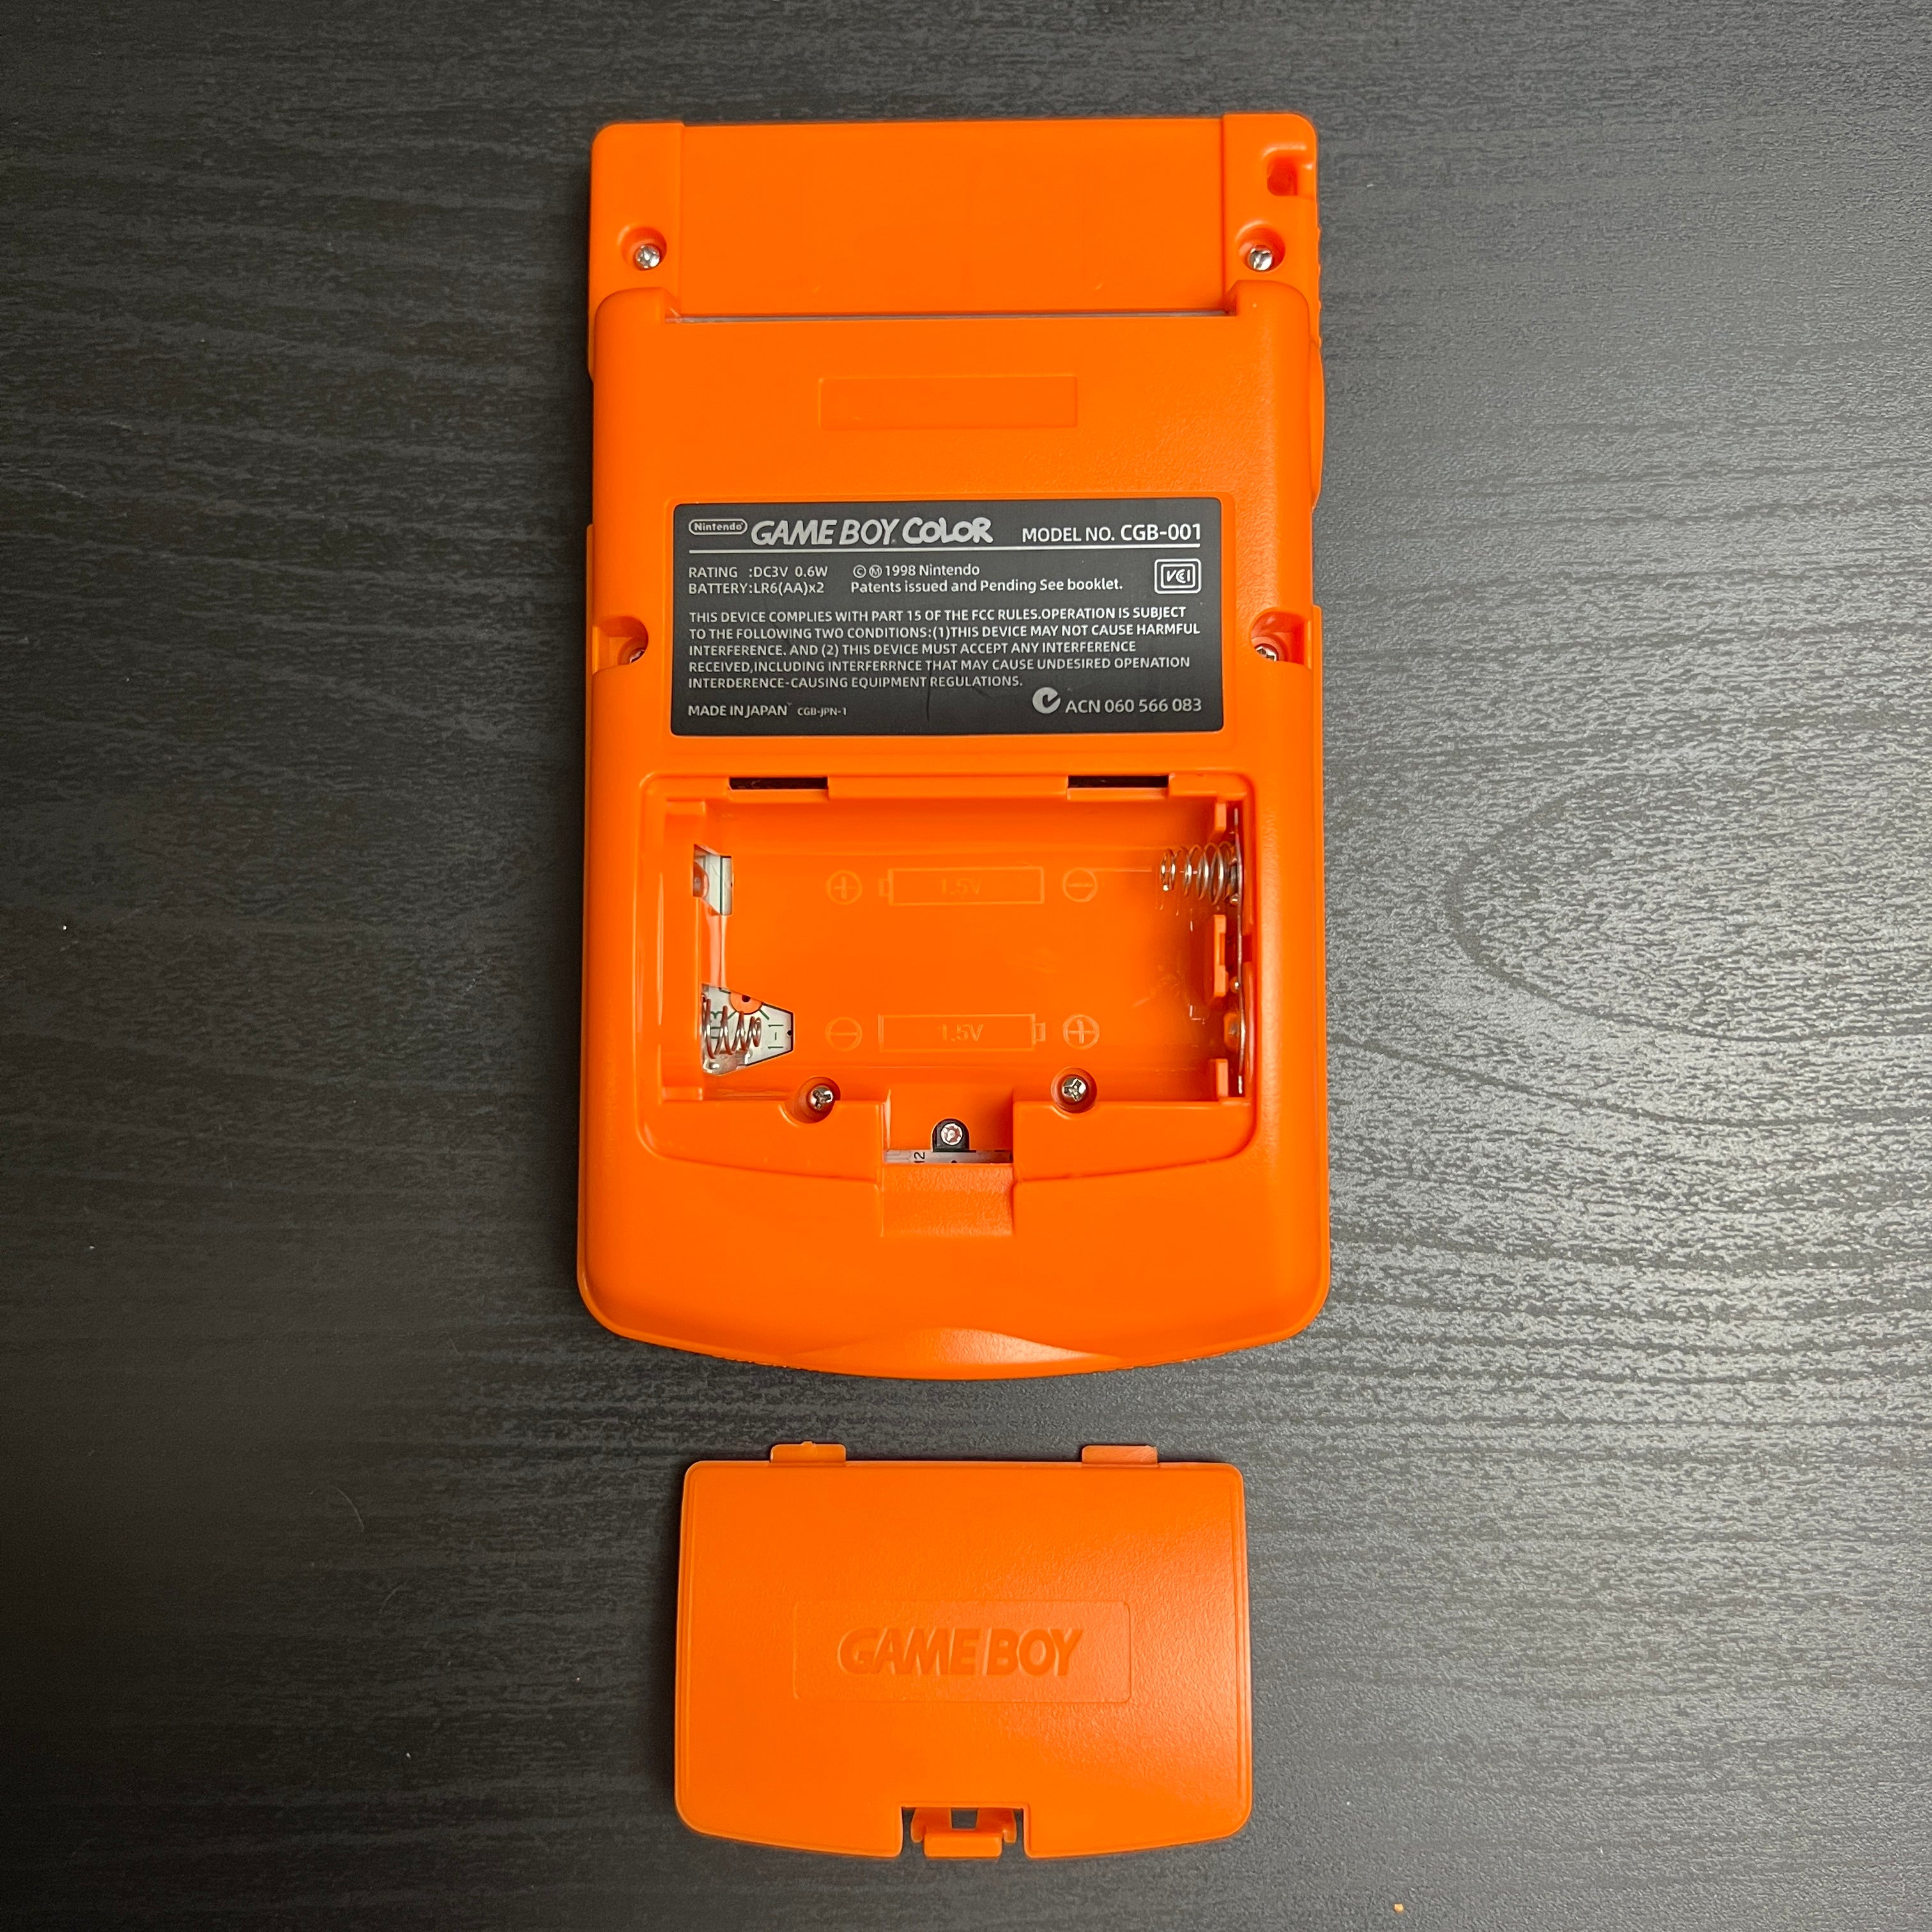 Modded Game Boy Color w/ IPS Display (All Orange)